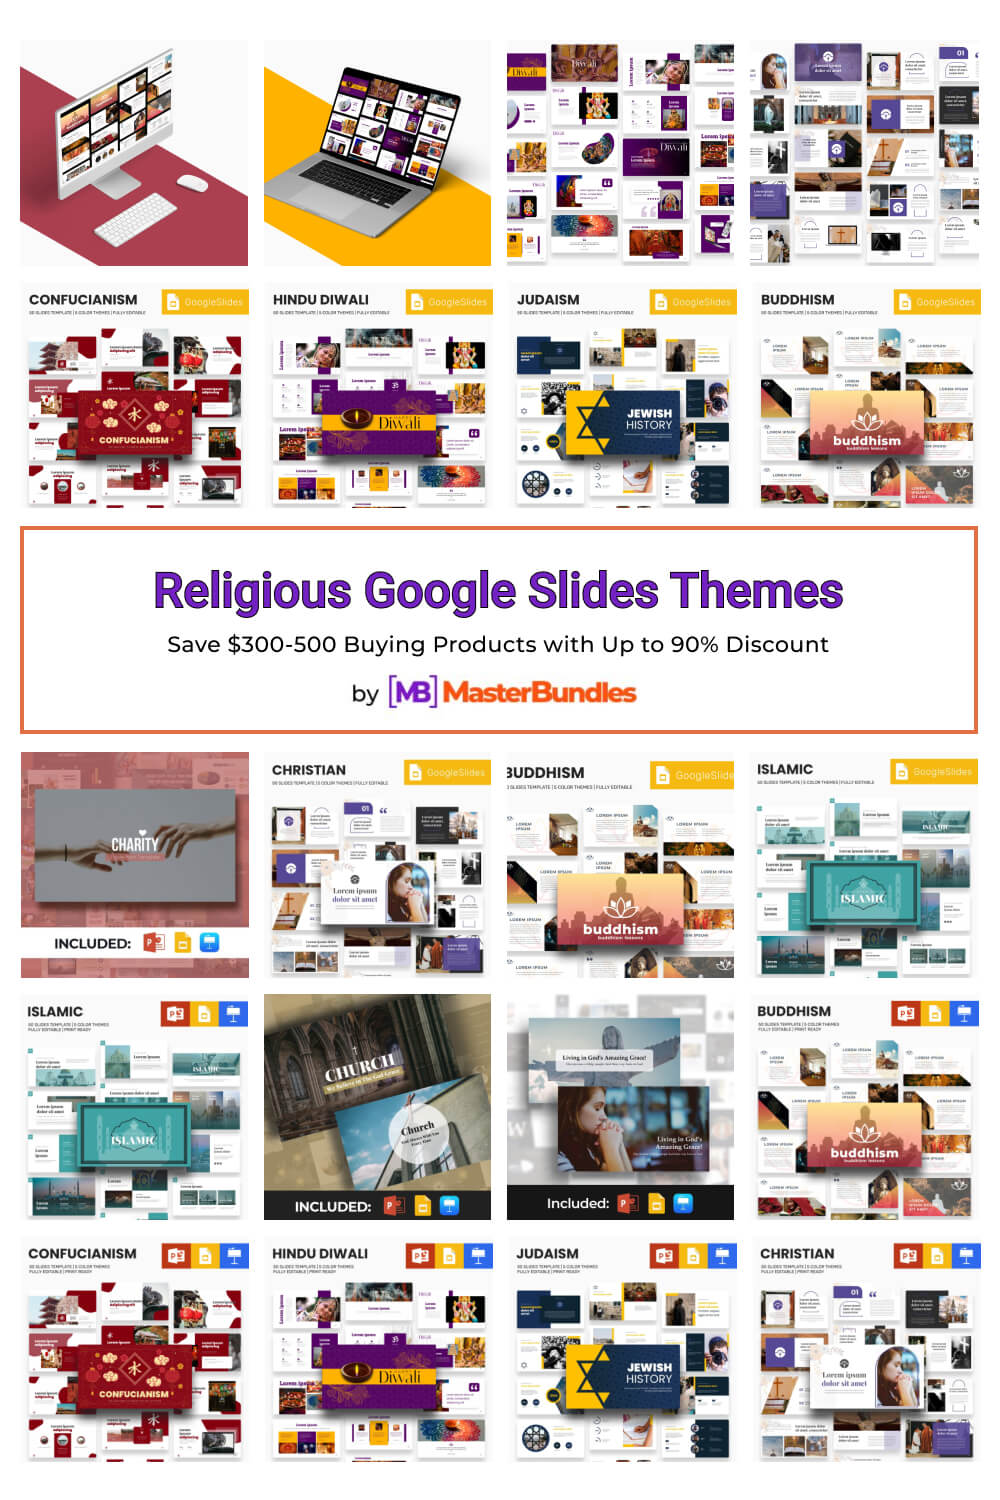 religious google slides themes pinterest image.